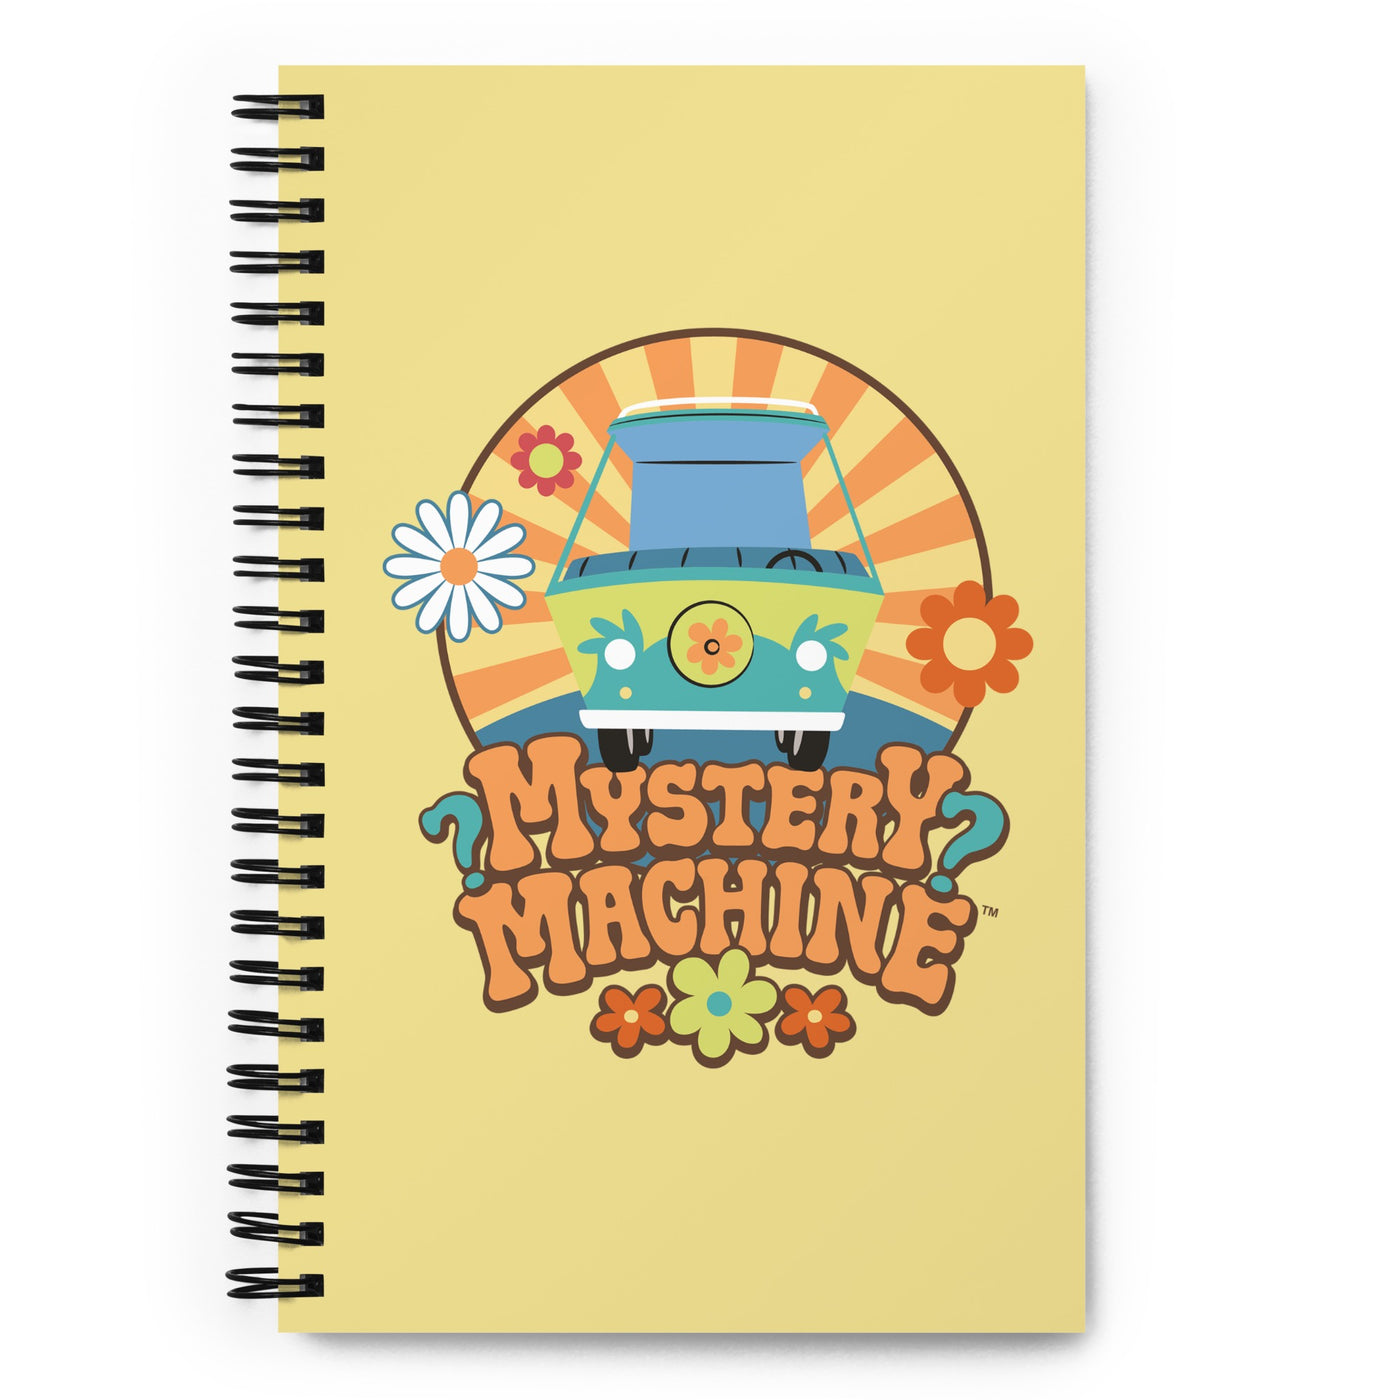 Scooby Doo Mystery Machine Spiral Notebook